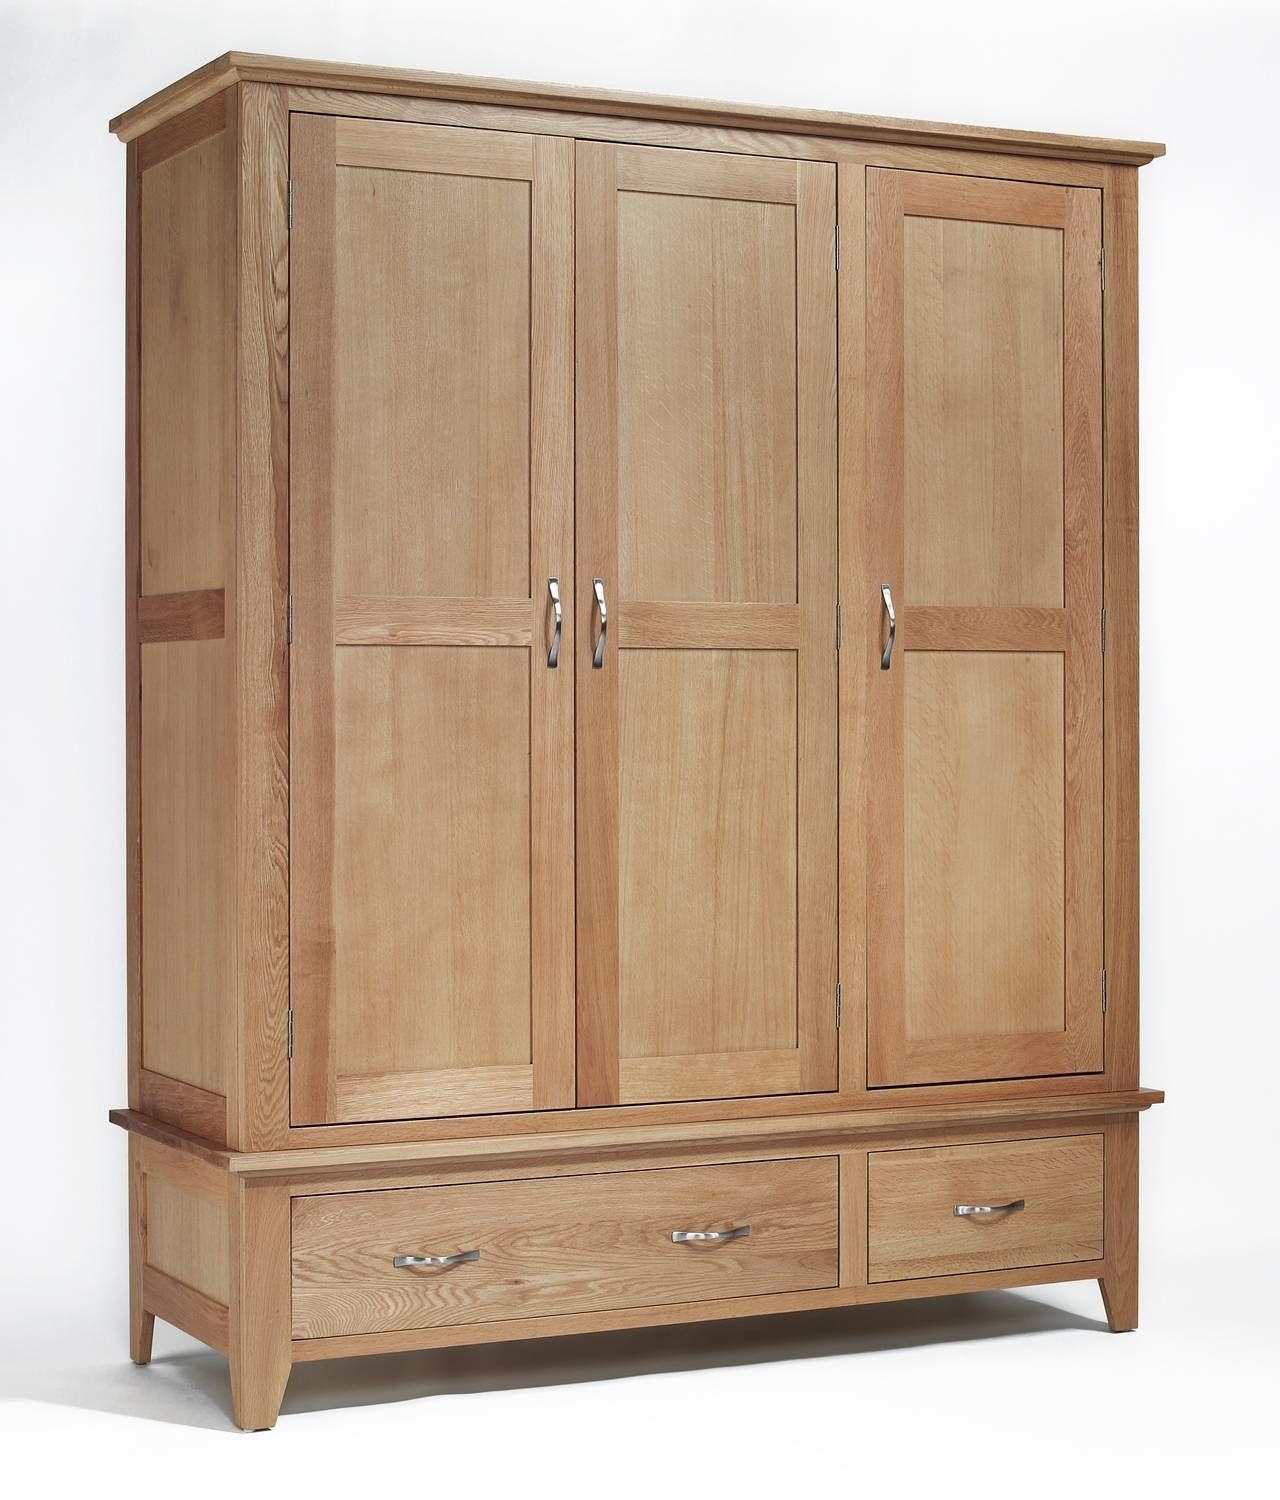 Elegant Oak Triple Wardrobe With Drawers | Hampshire Furniture Within Hampshire Wardrobes (View 6 of 15)